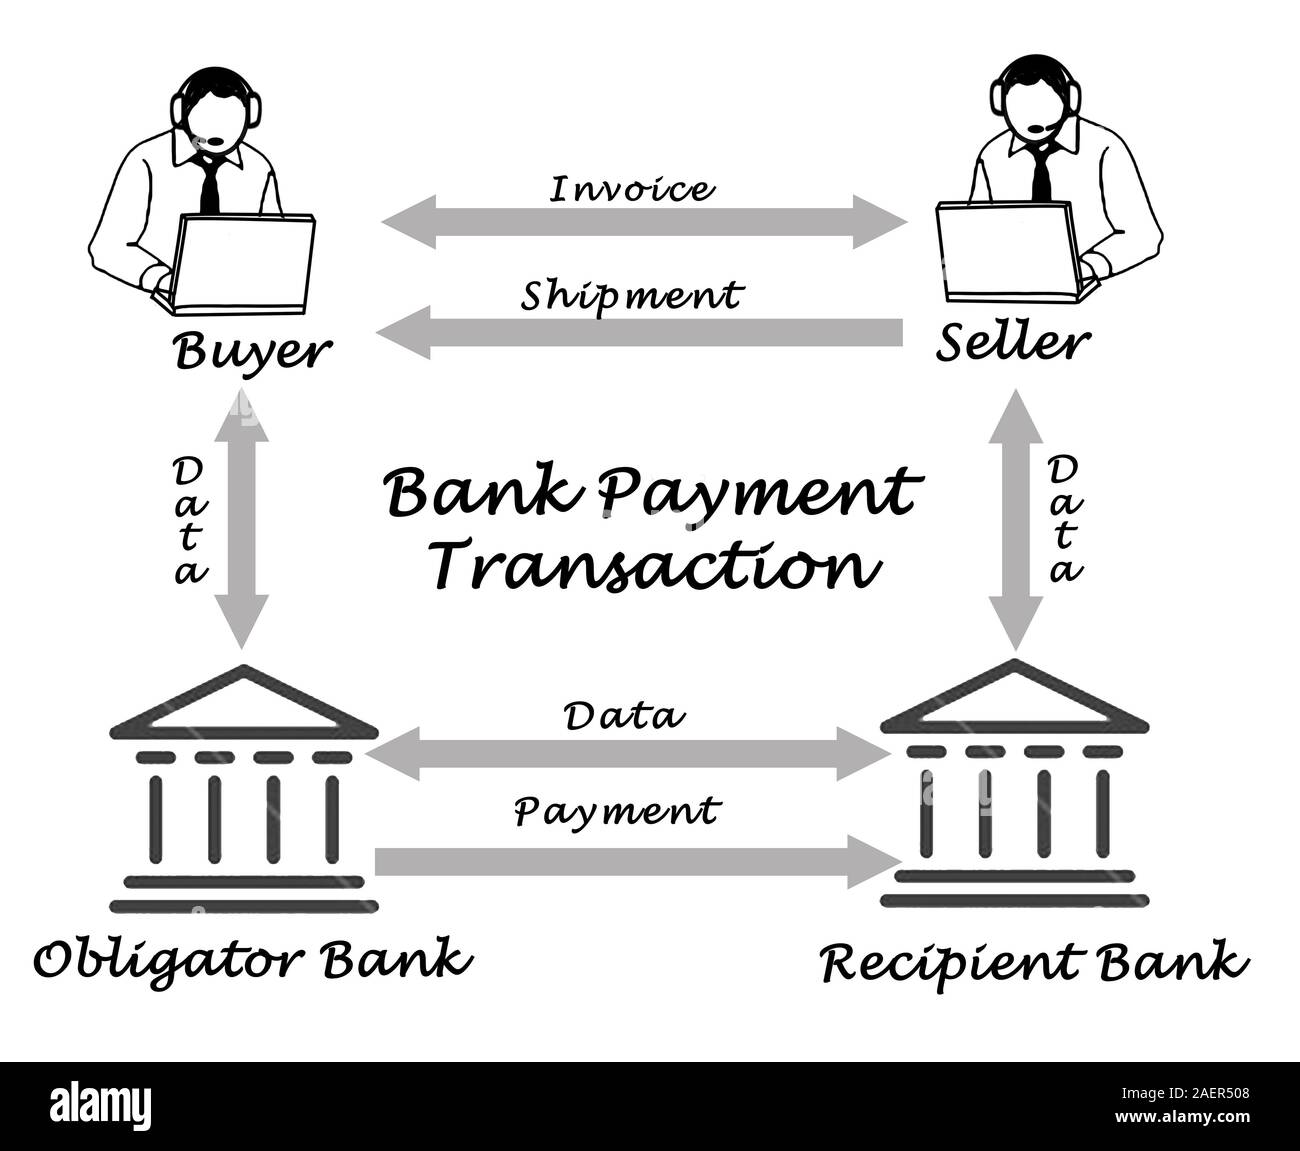 Bank Payment Transaction Stock Photo